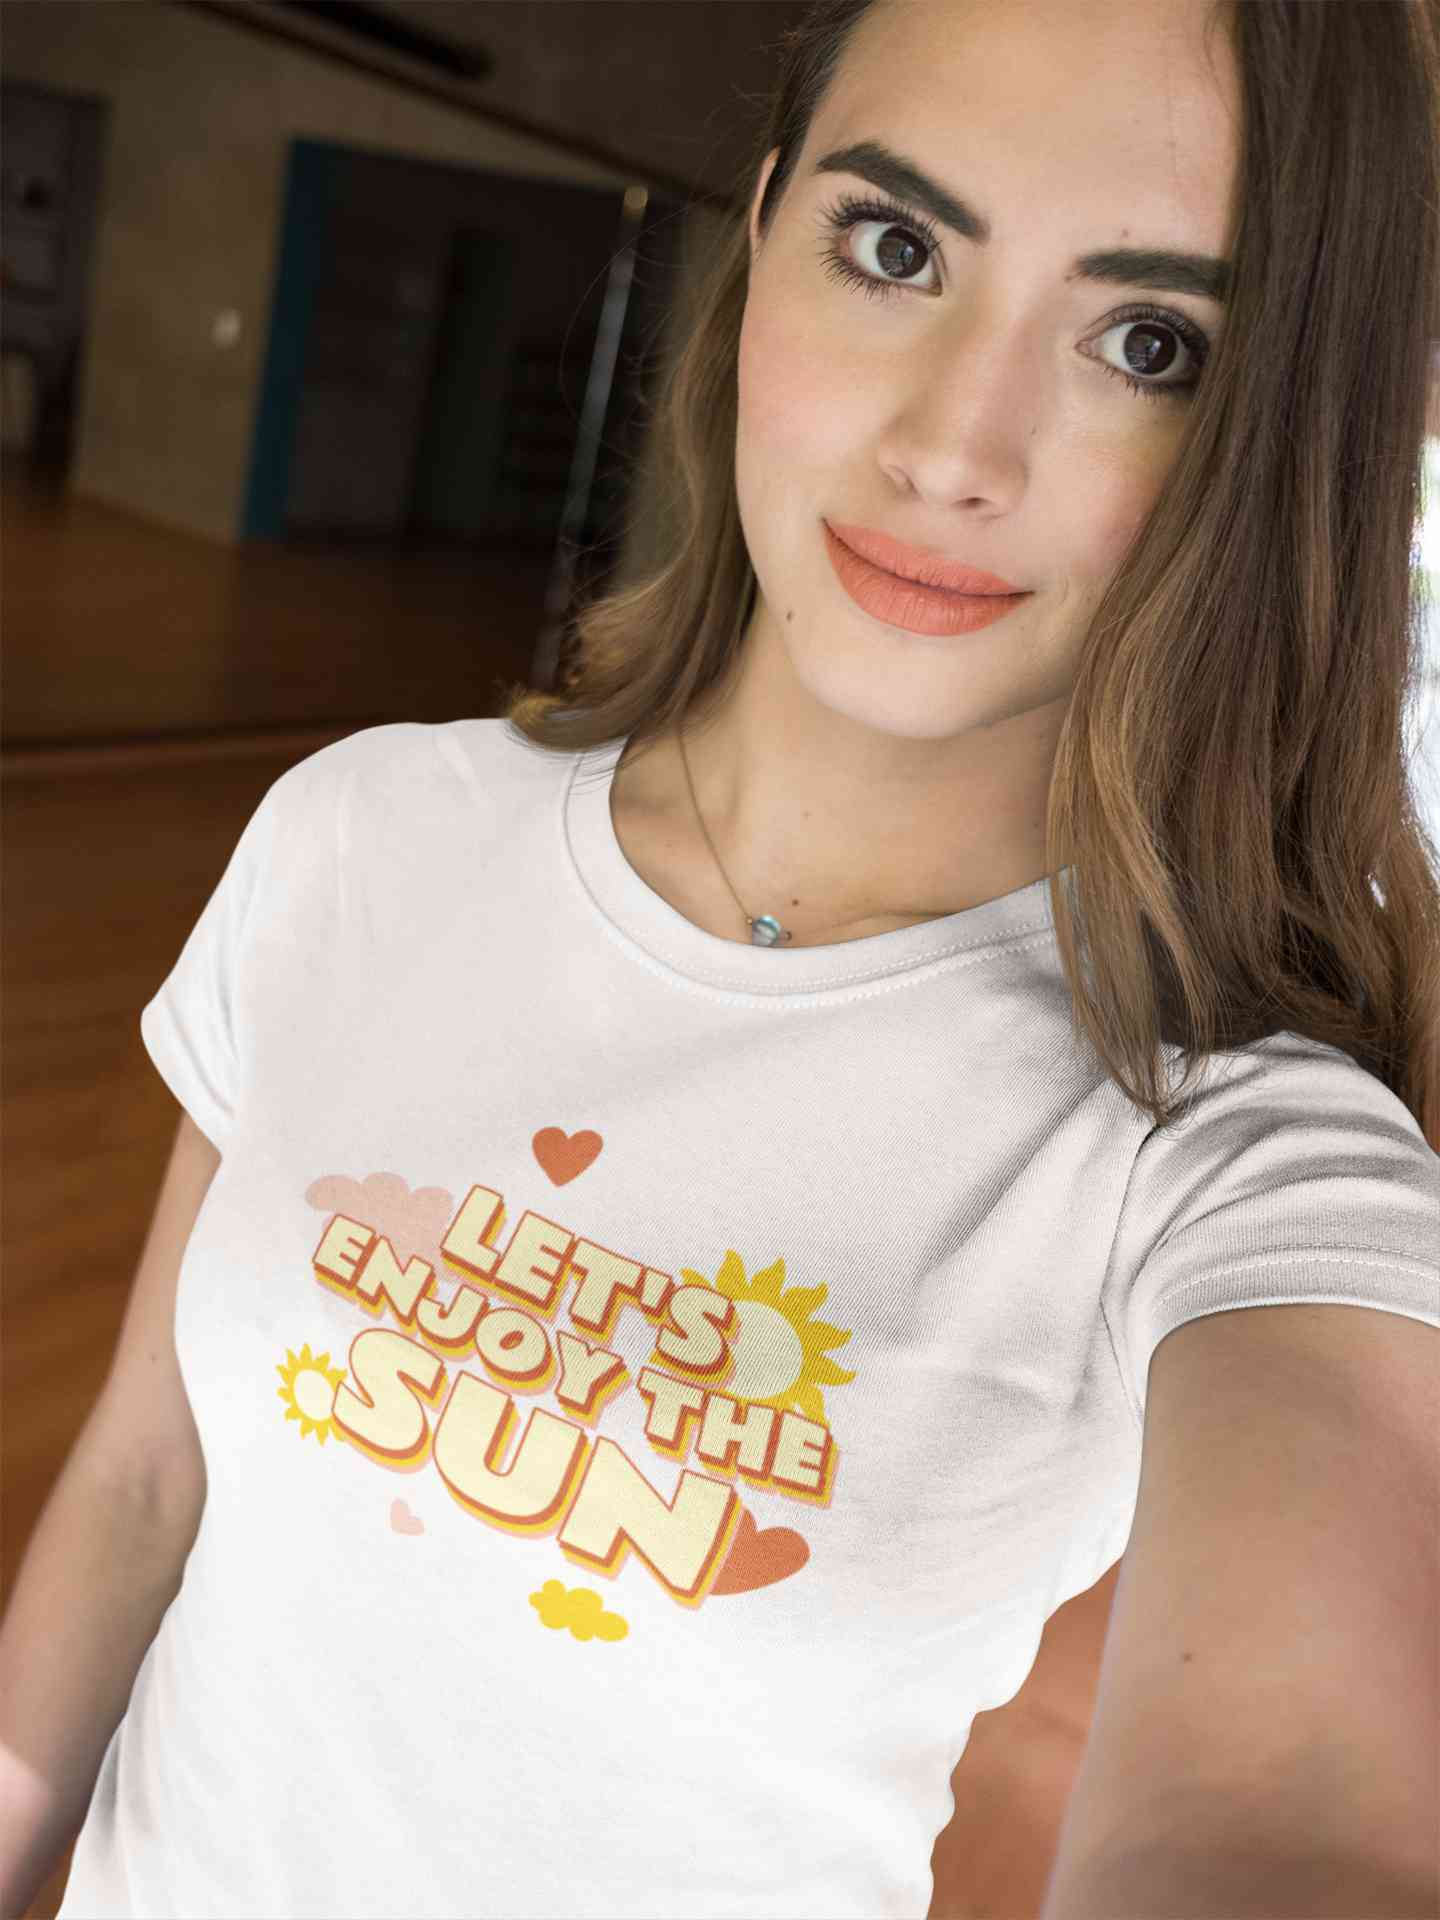 Lets Enjoy The Sun Quote Women Half Sleeves T-shirt- FunkyTeesClub